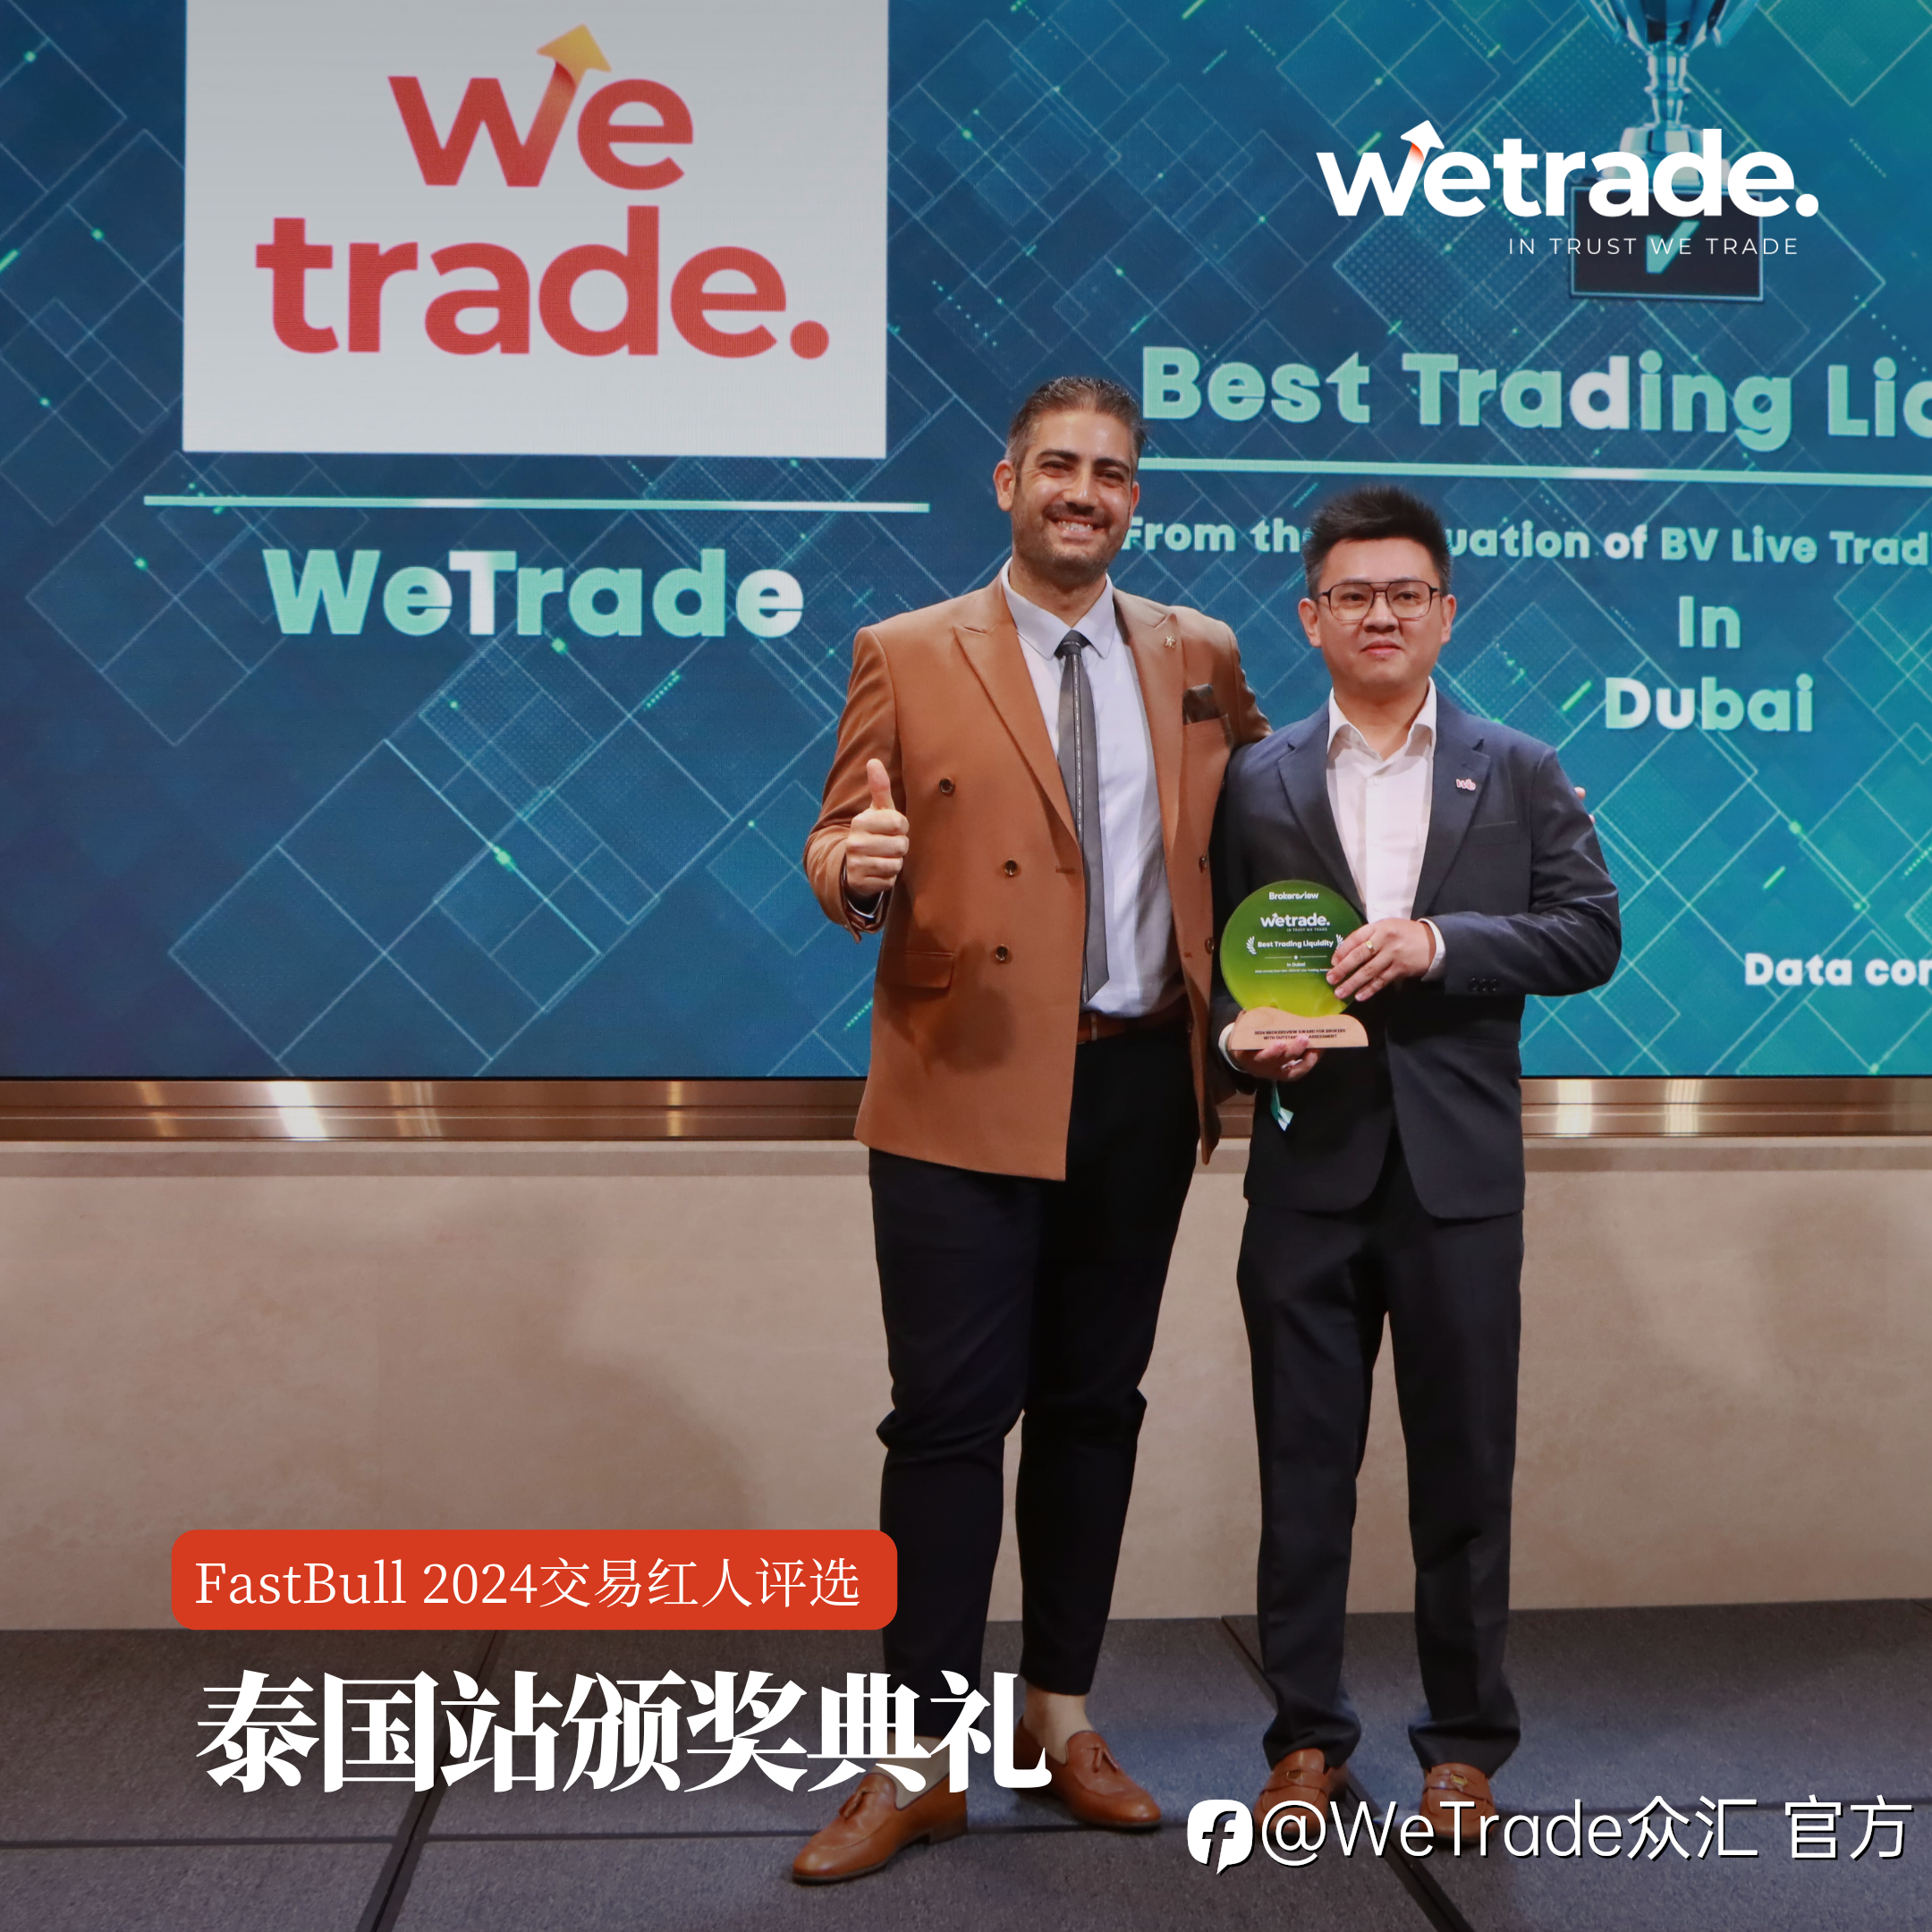 WeTrade：实力再获认可！WeTrade摘得“最佳交易流动性”大奖